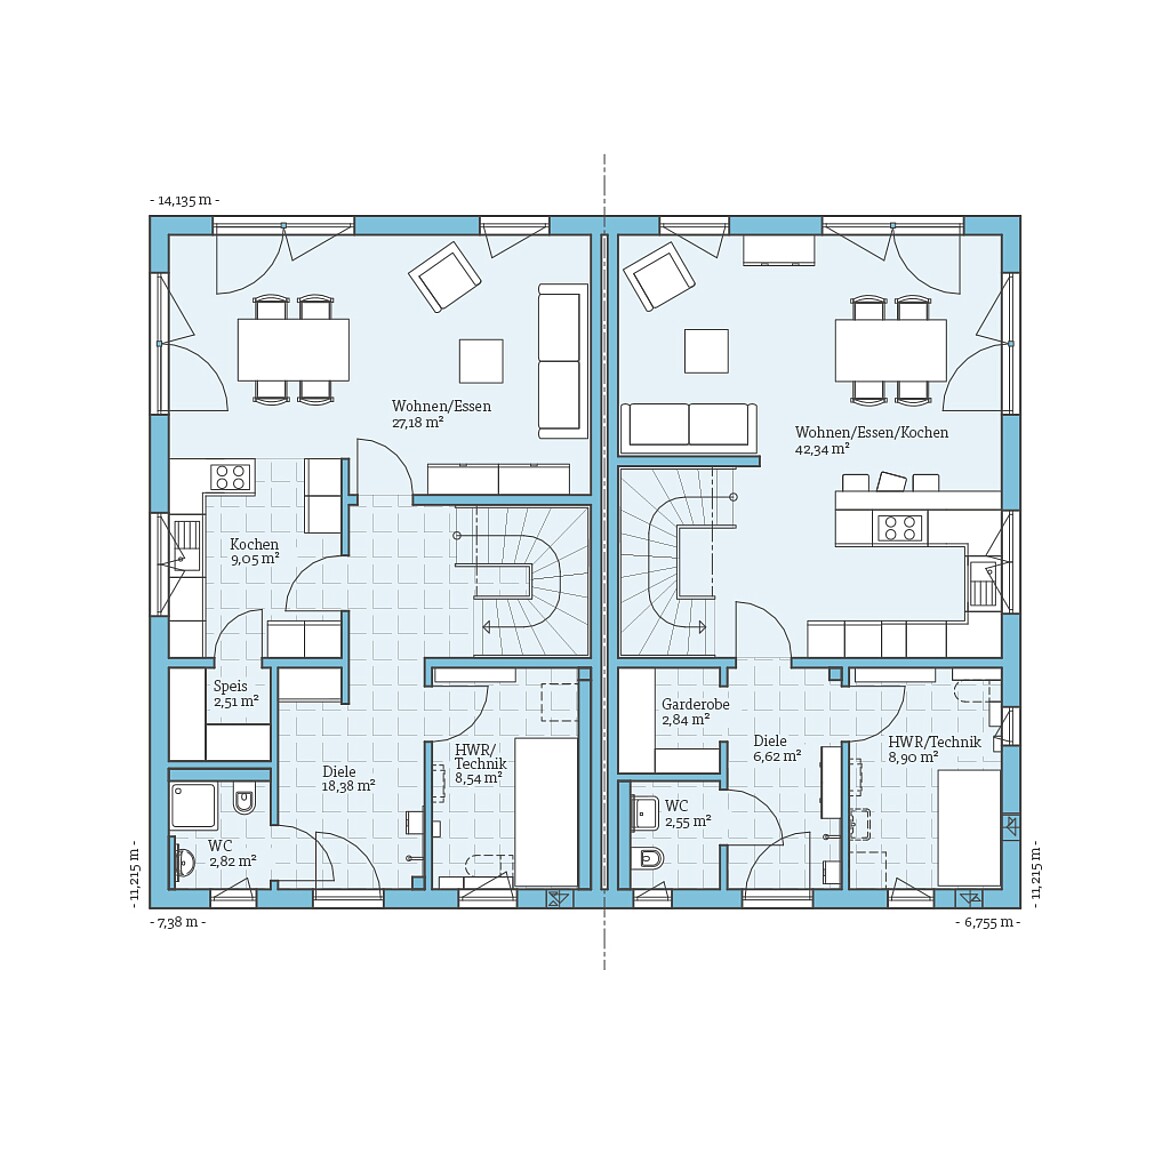 Prefabricated semi-detached house 137/126: Ground floor plan